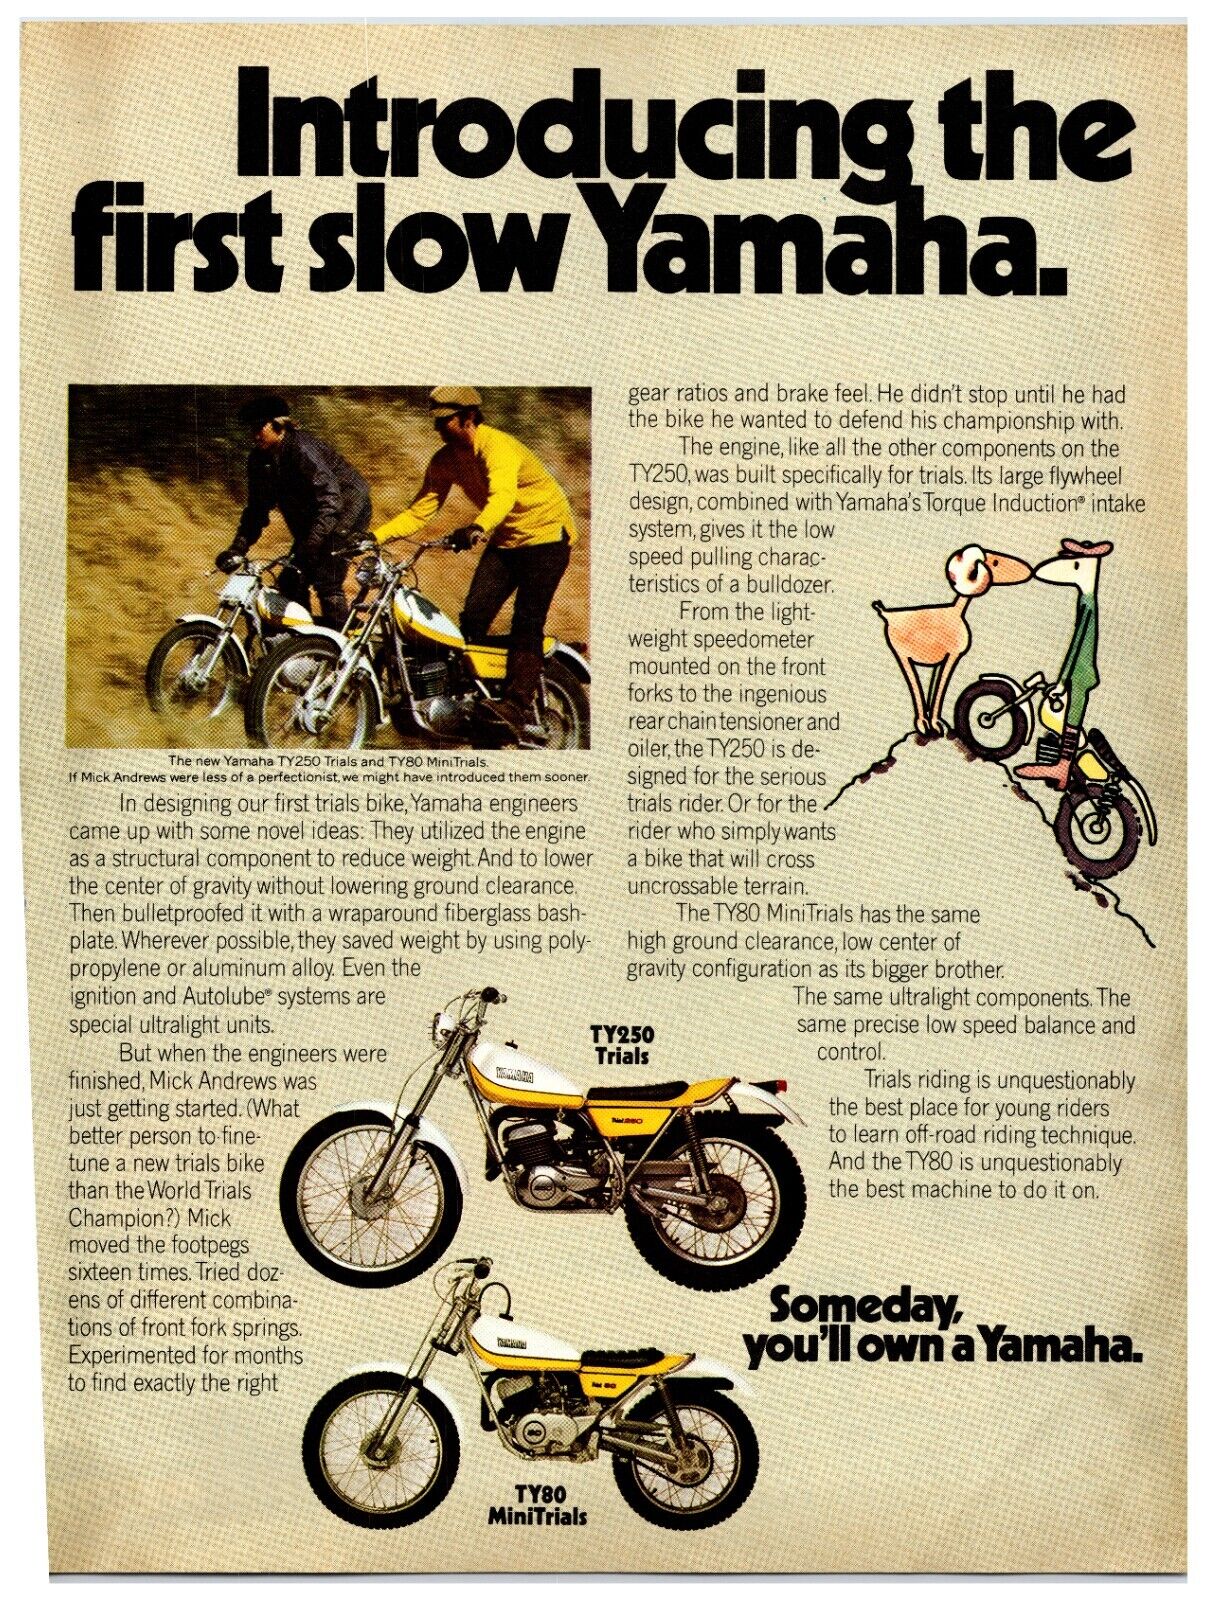 1973 Yamaha TY250 / TY80 Motorcycles - Original Print Advertisement (8x11)